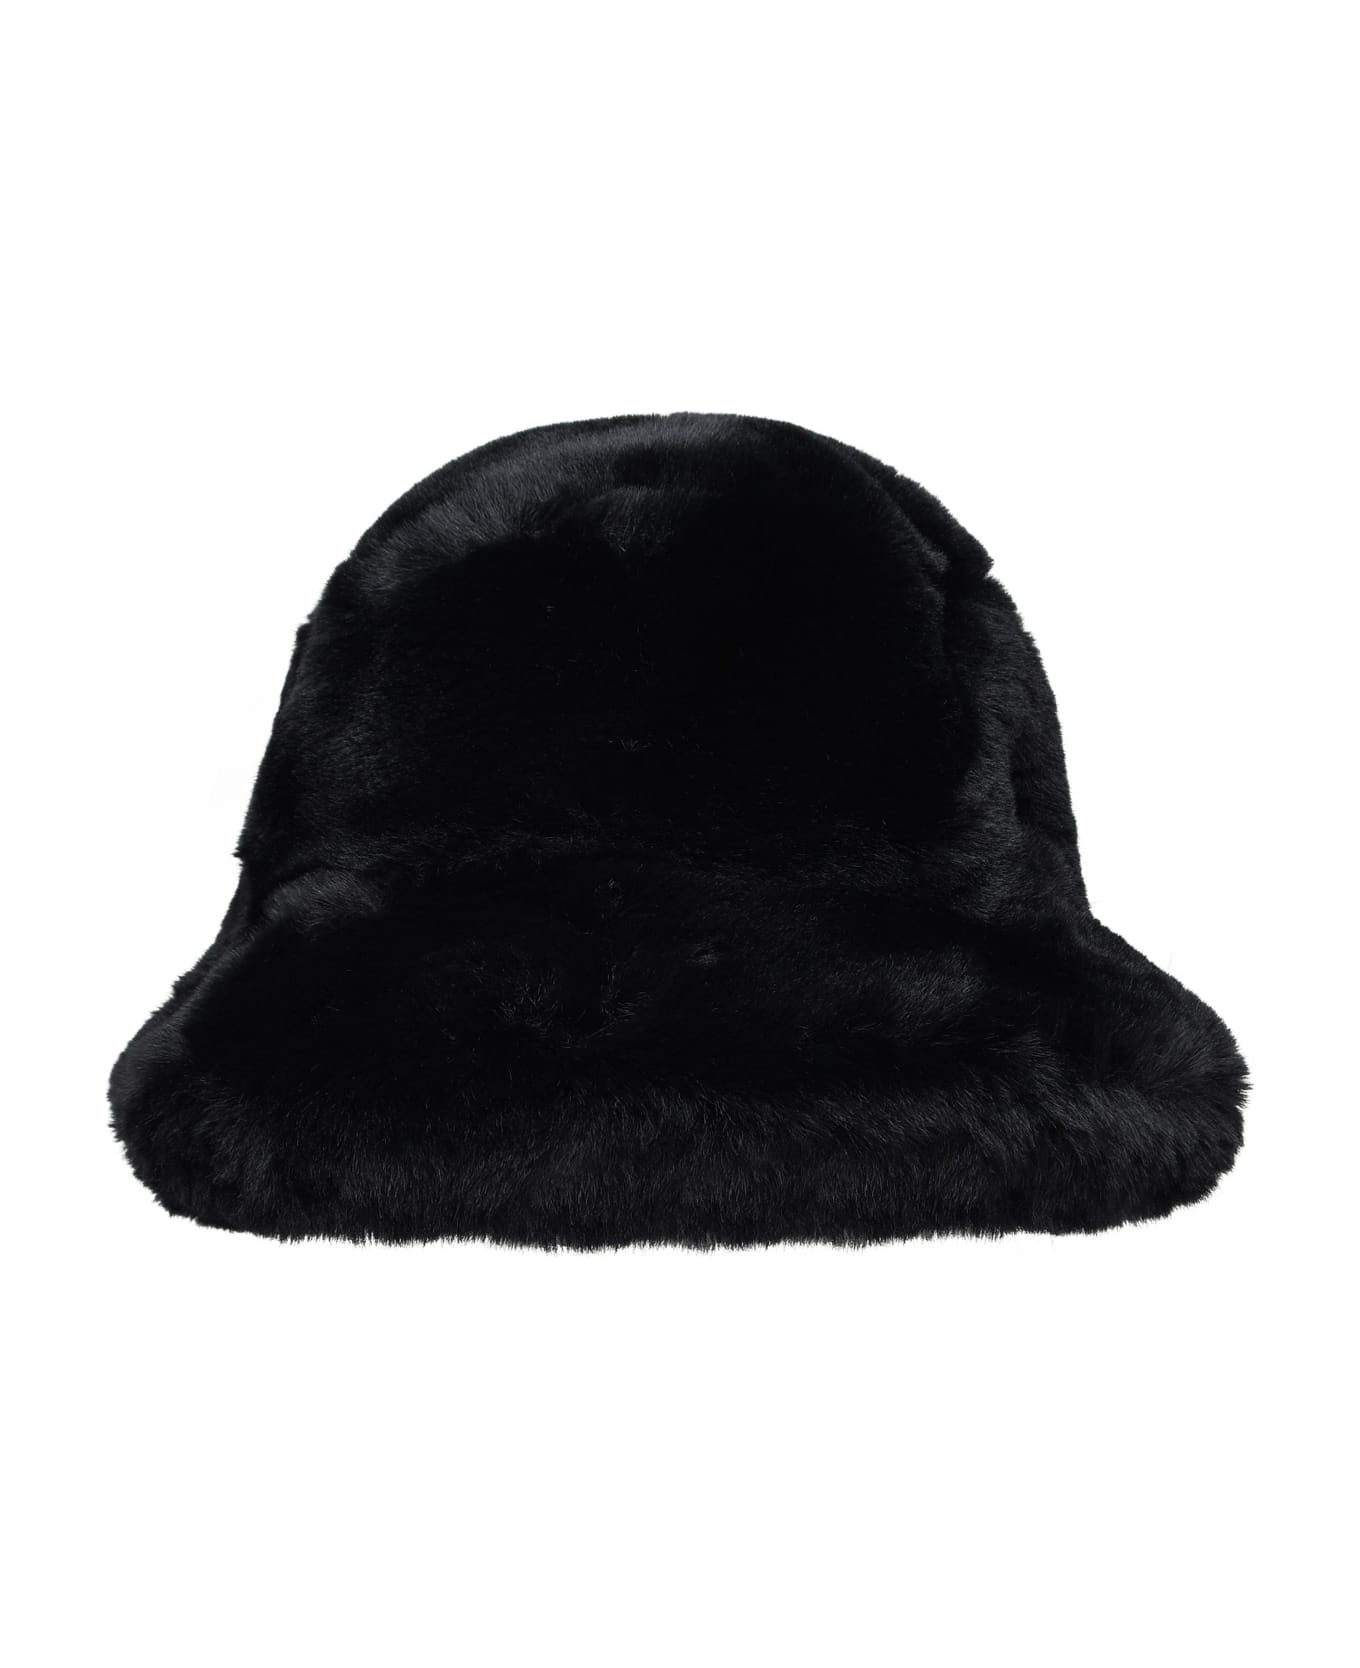 Moose Knuckles Sackett Black Polyester Hat - Black